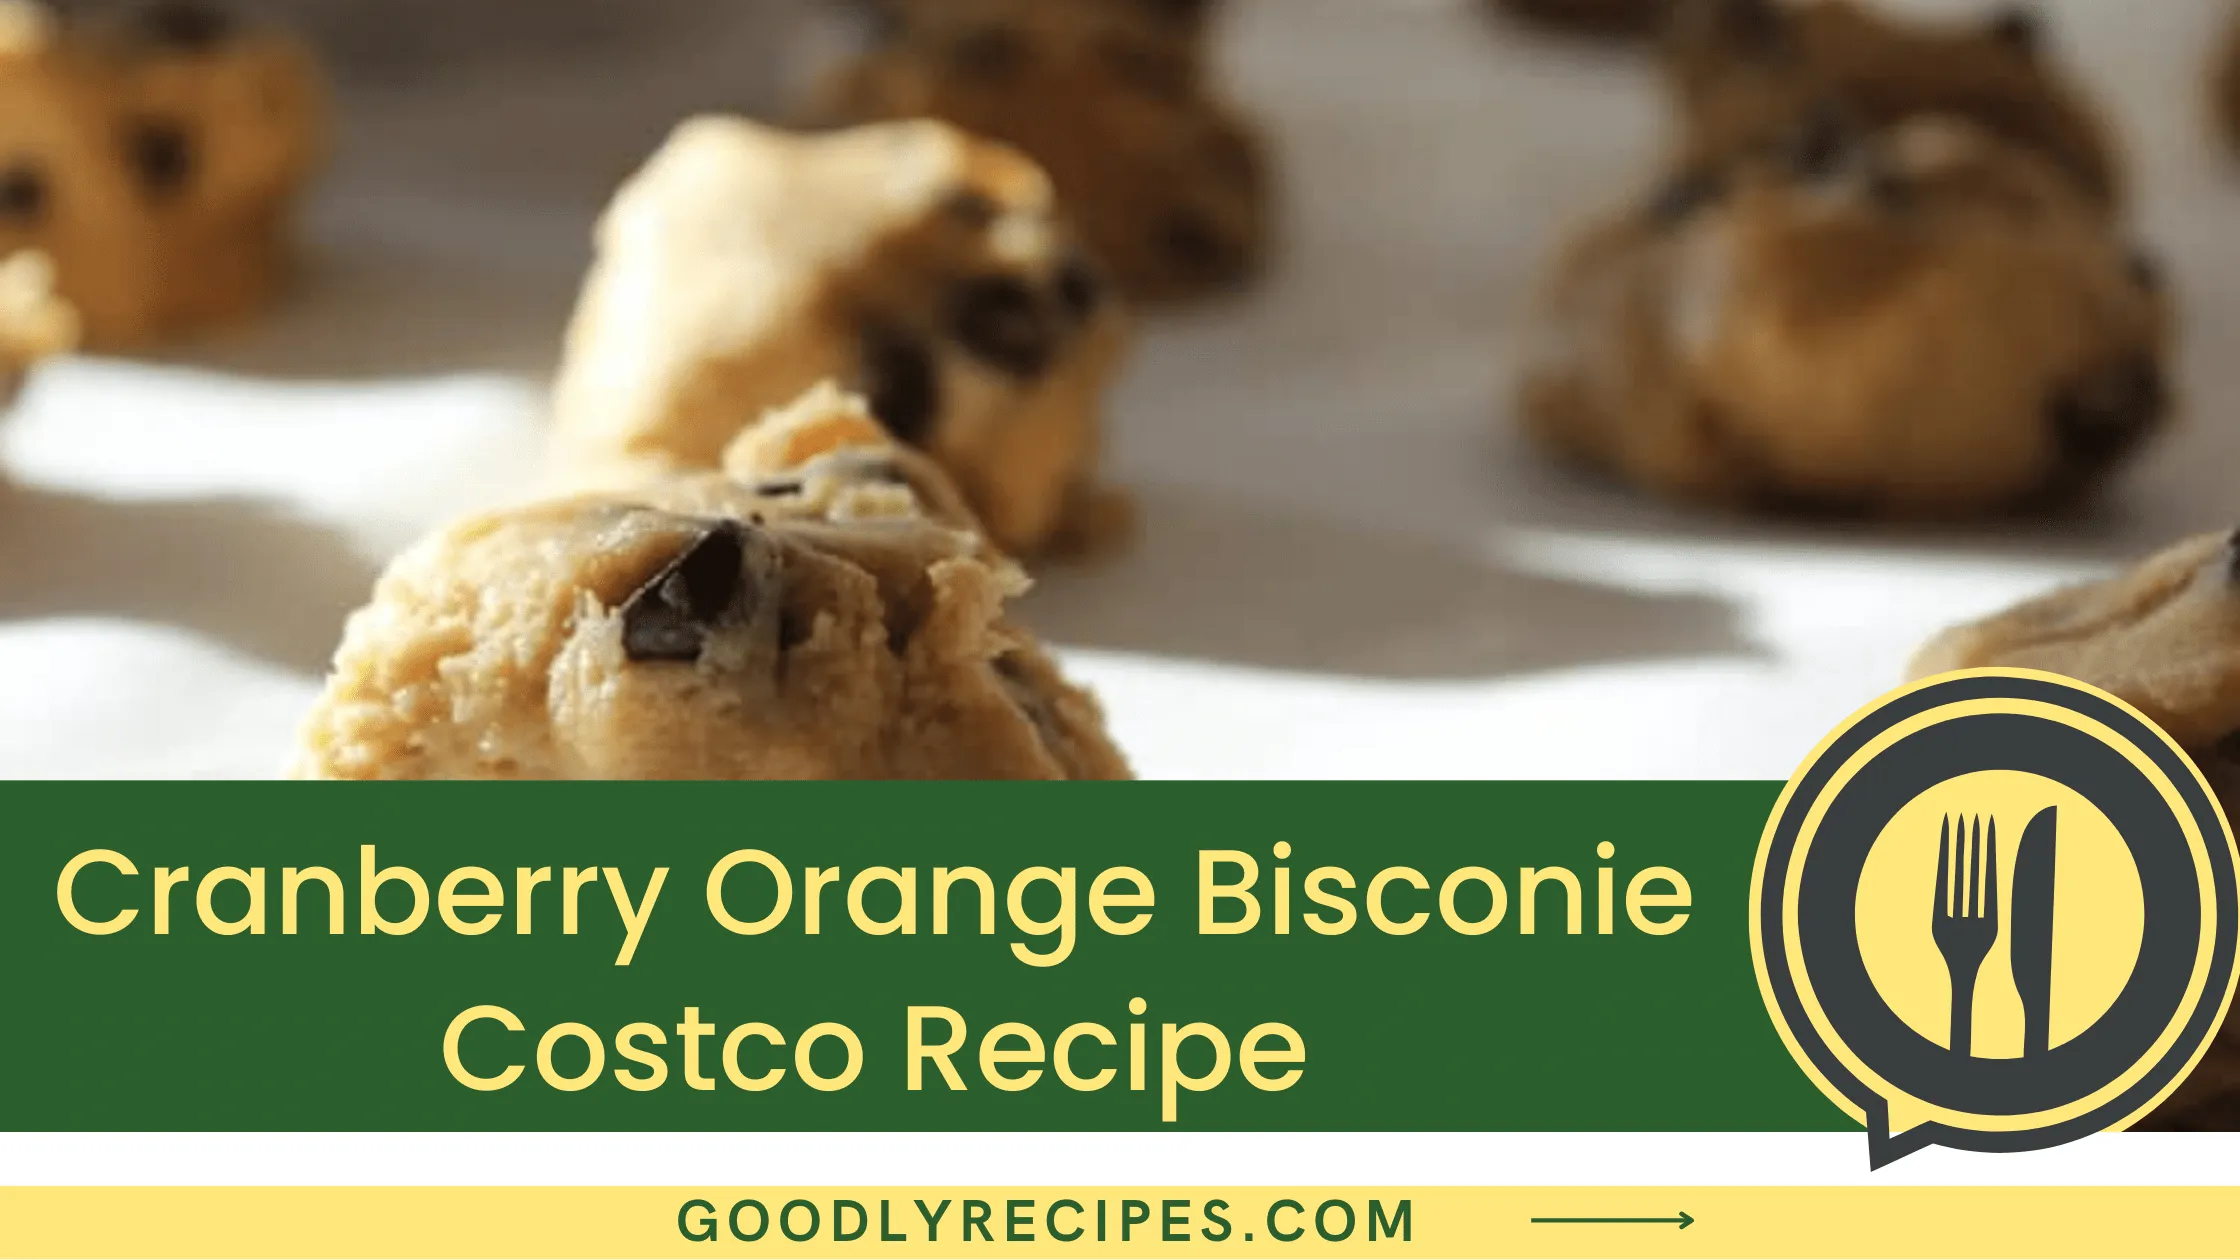 Cranberry Orange Bisconie Costco Recipe